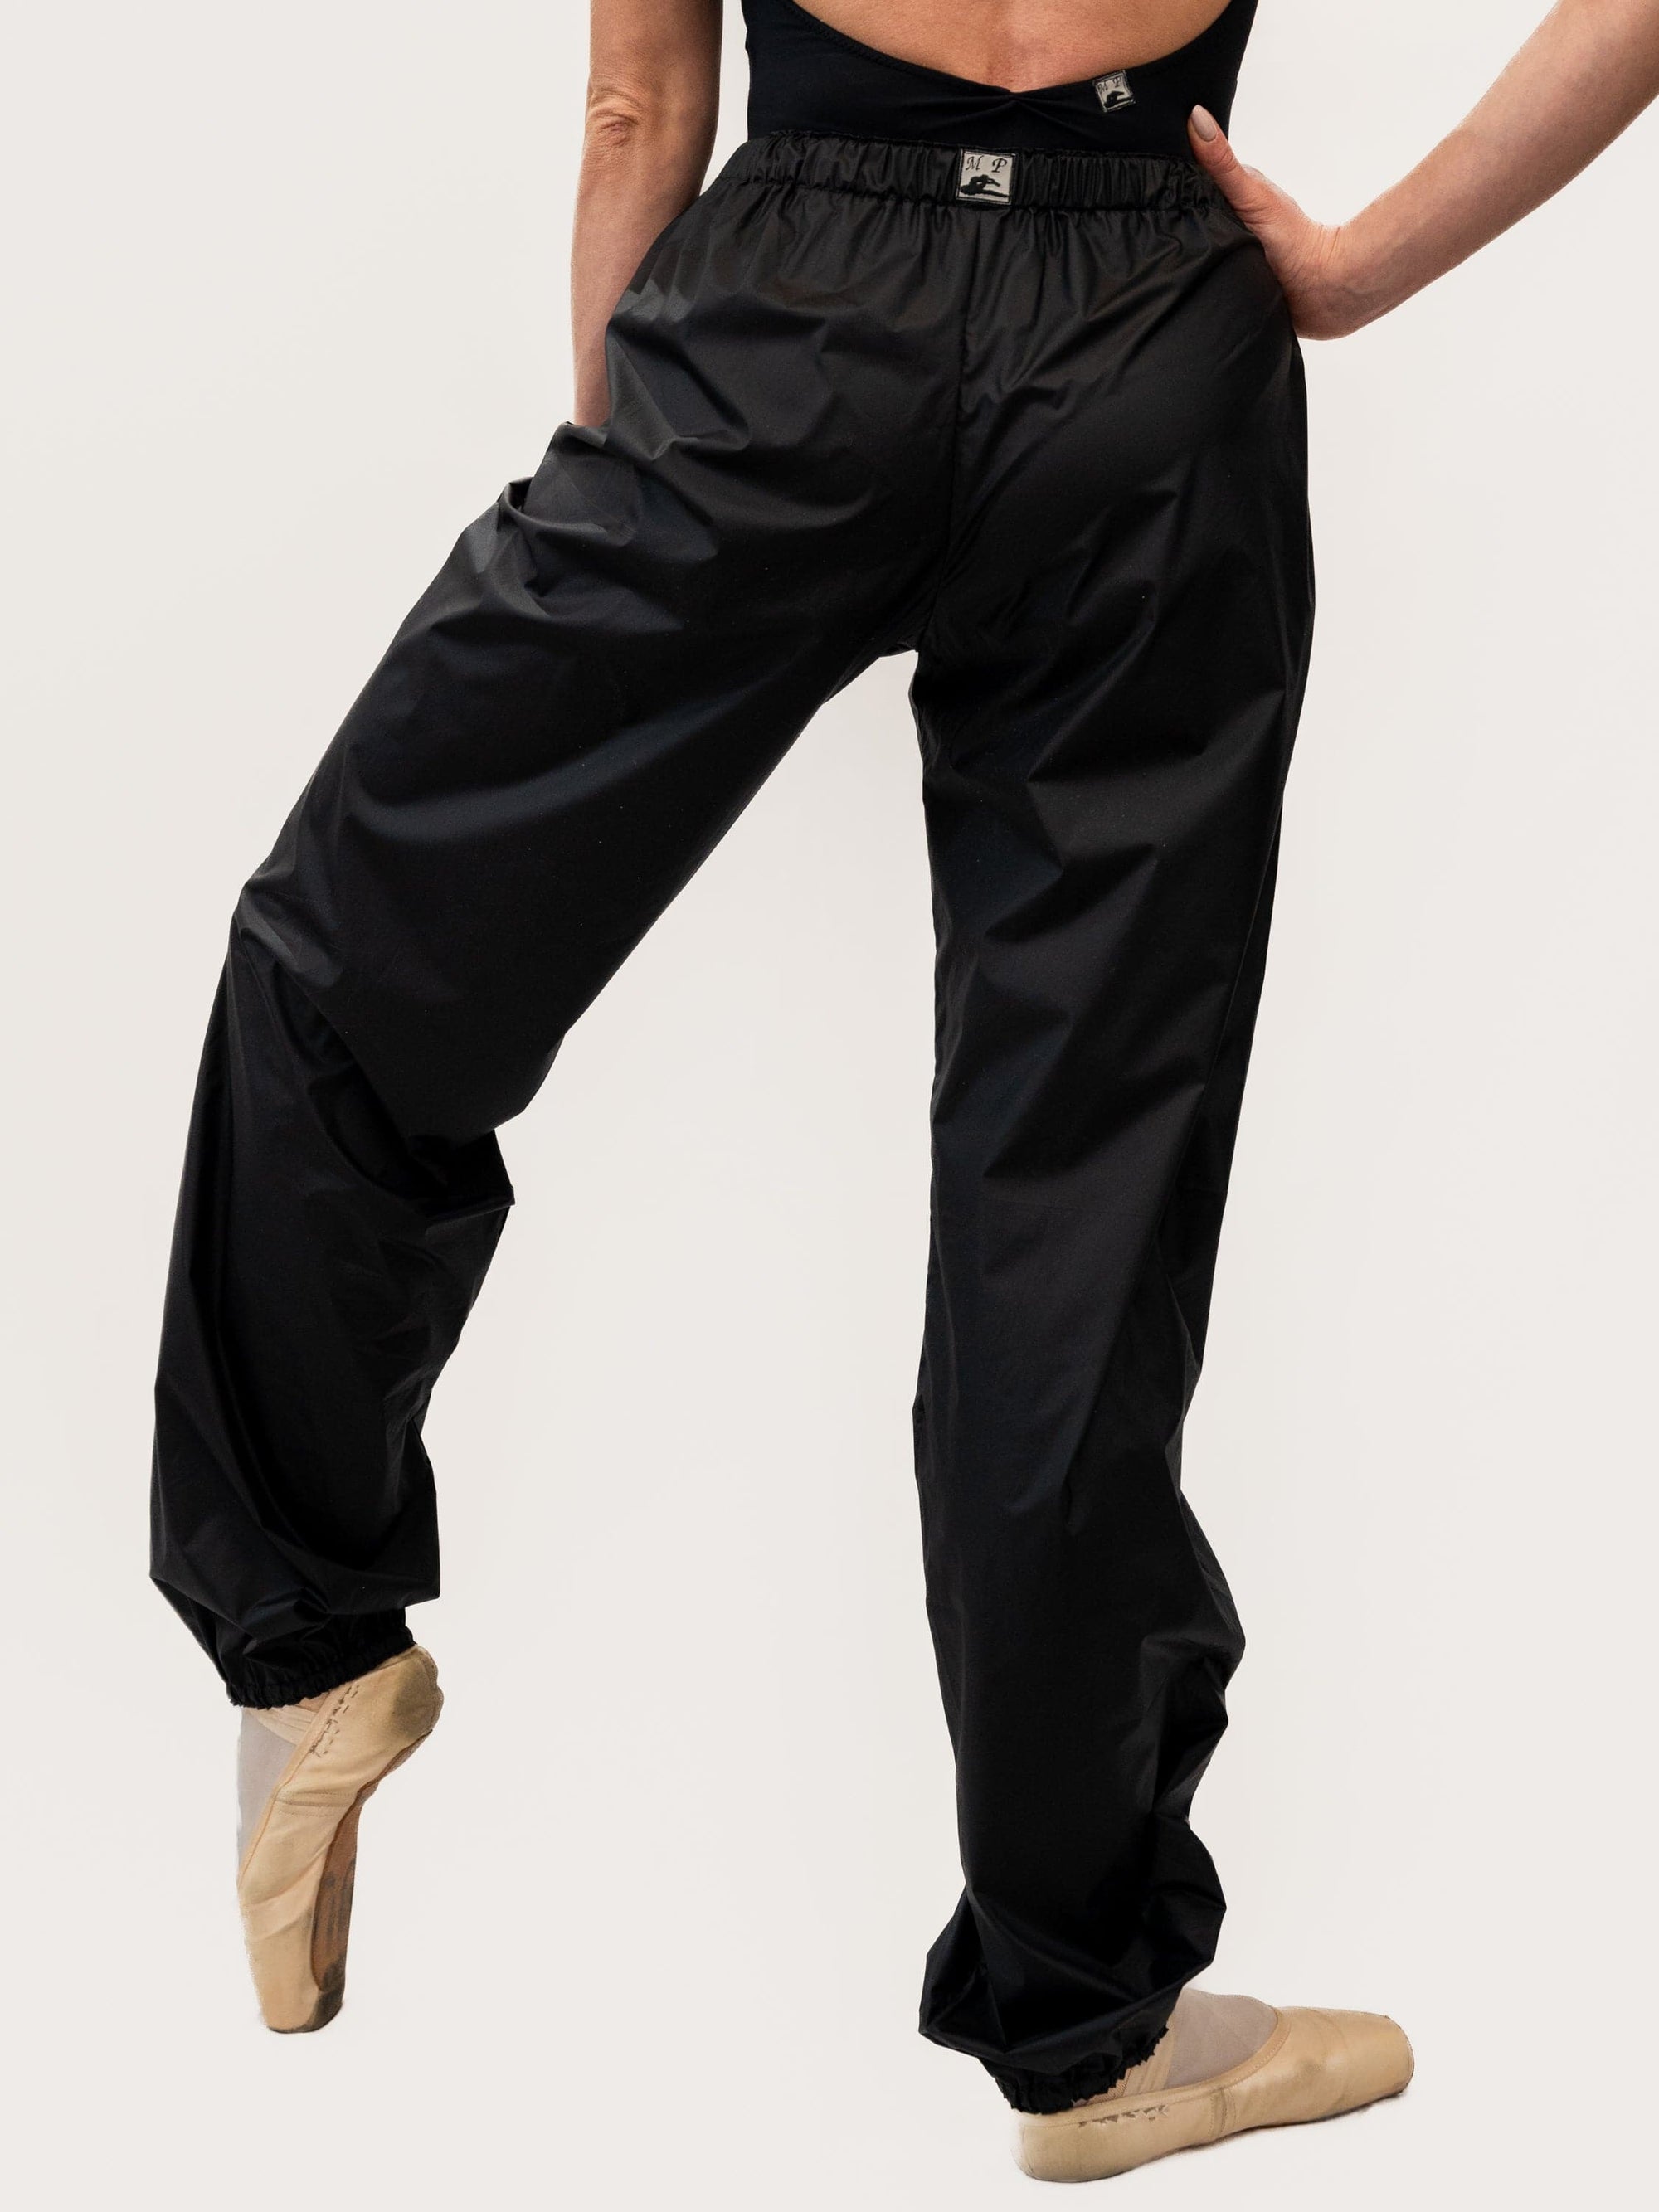 Black Warm-up Dance Trash Bag Pants MP5003 - Atelier della Danza MP